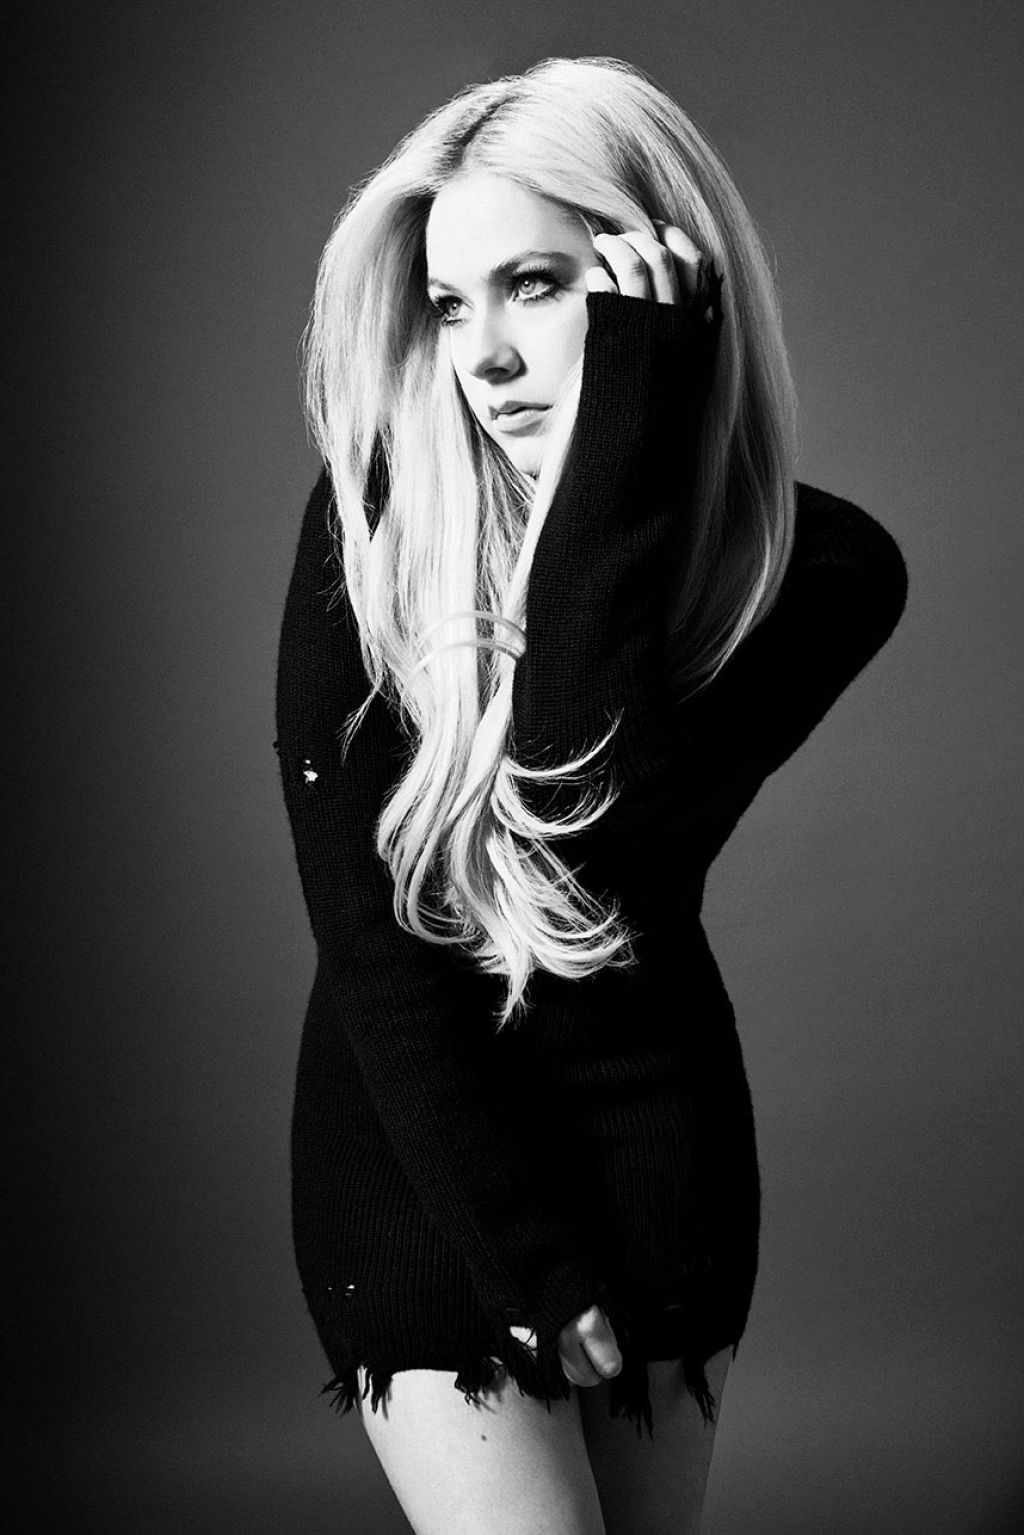 Avril Lavigne - "Head Above Water" Album Photoshoot 2018 ...